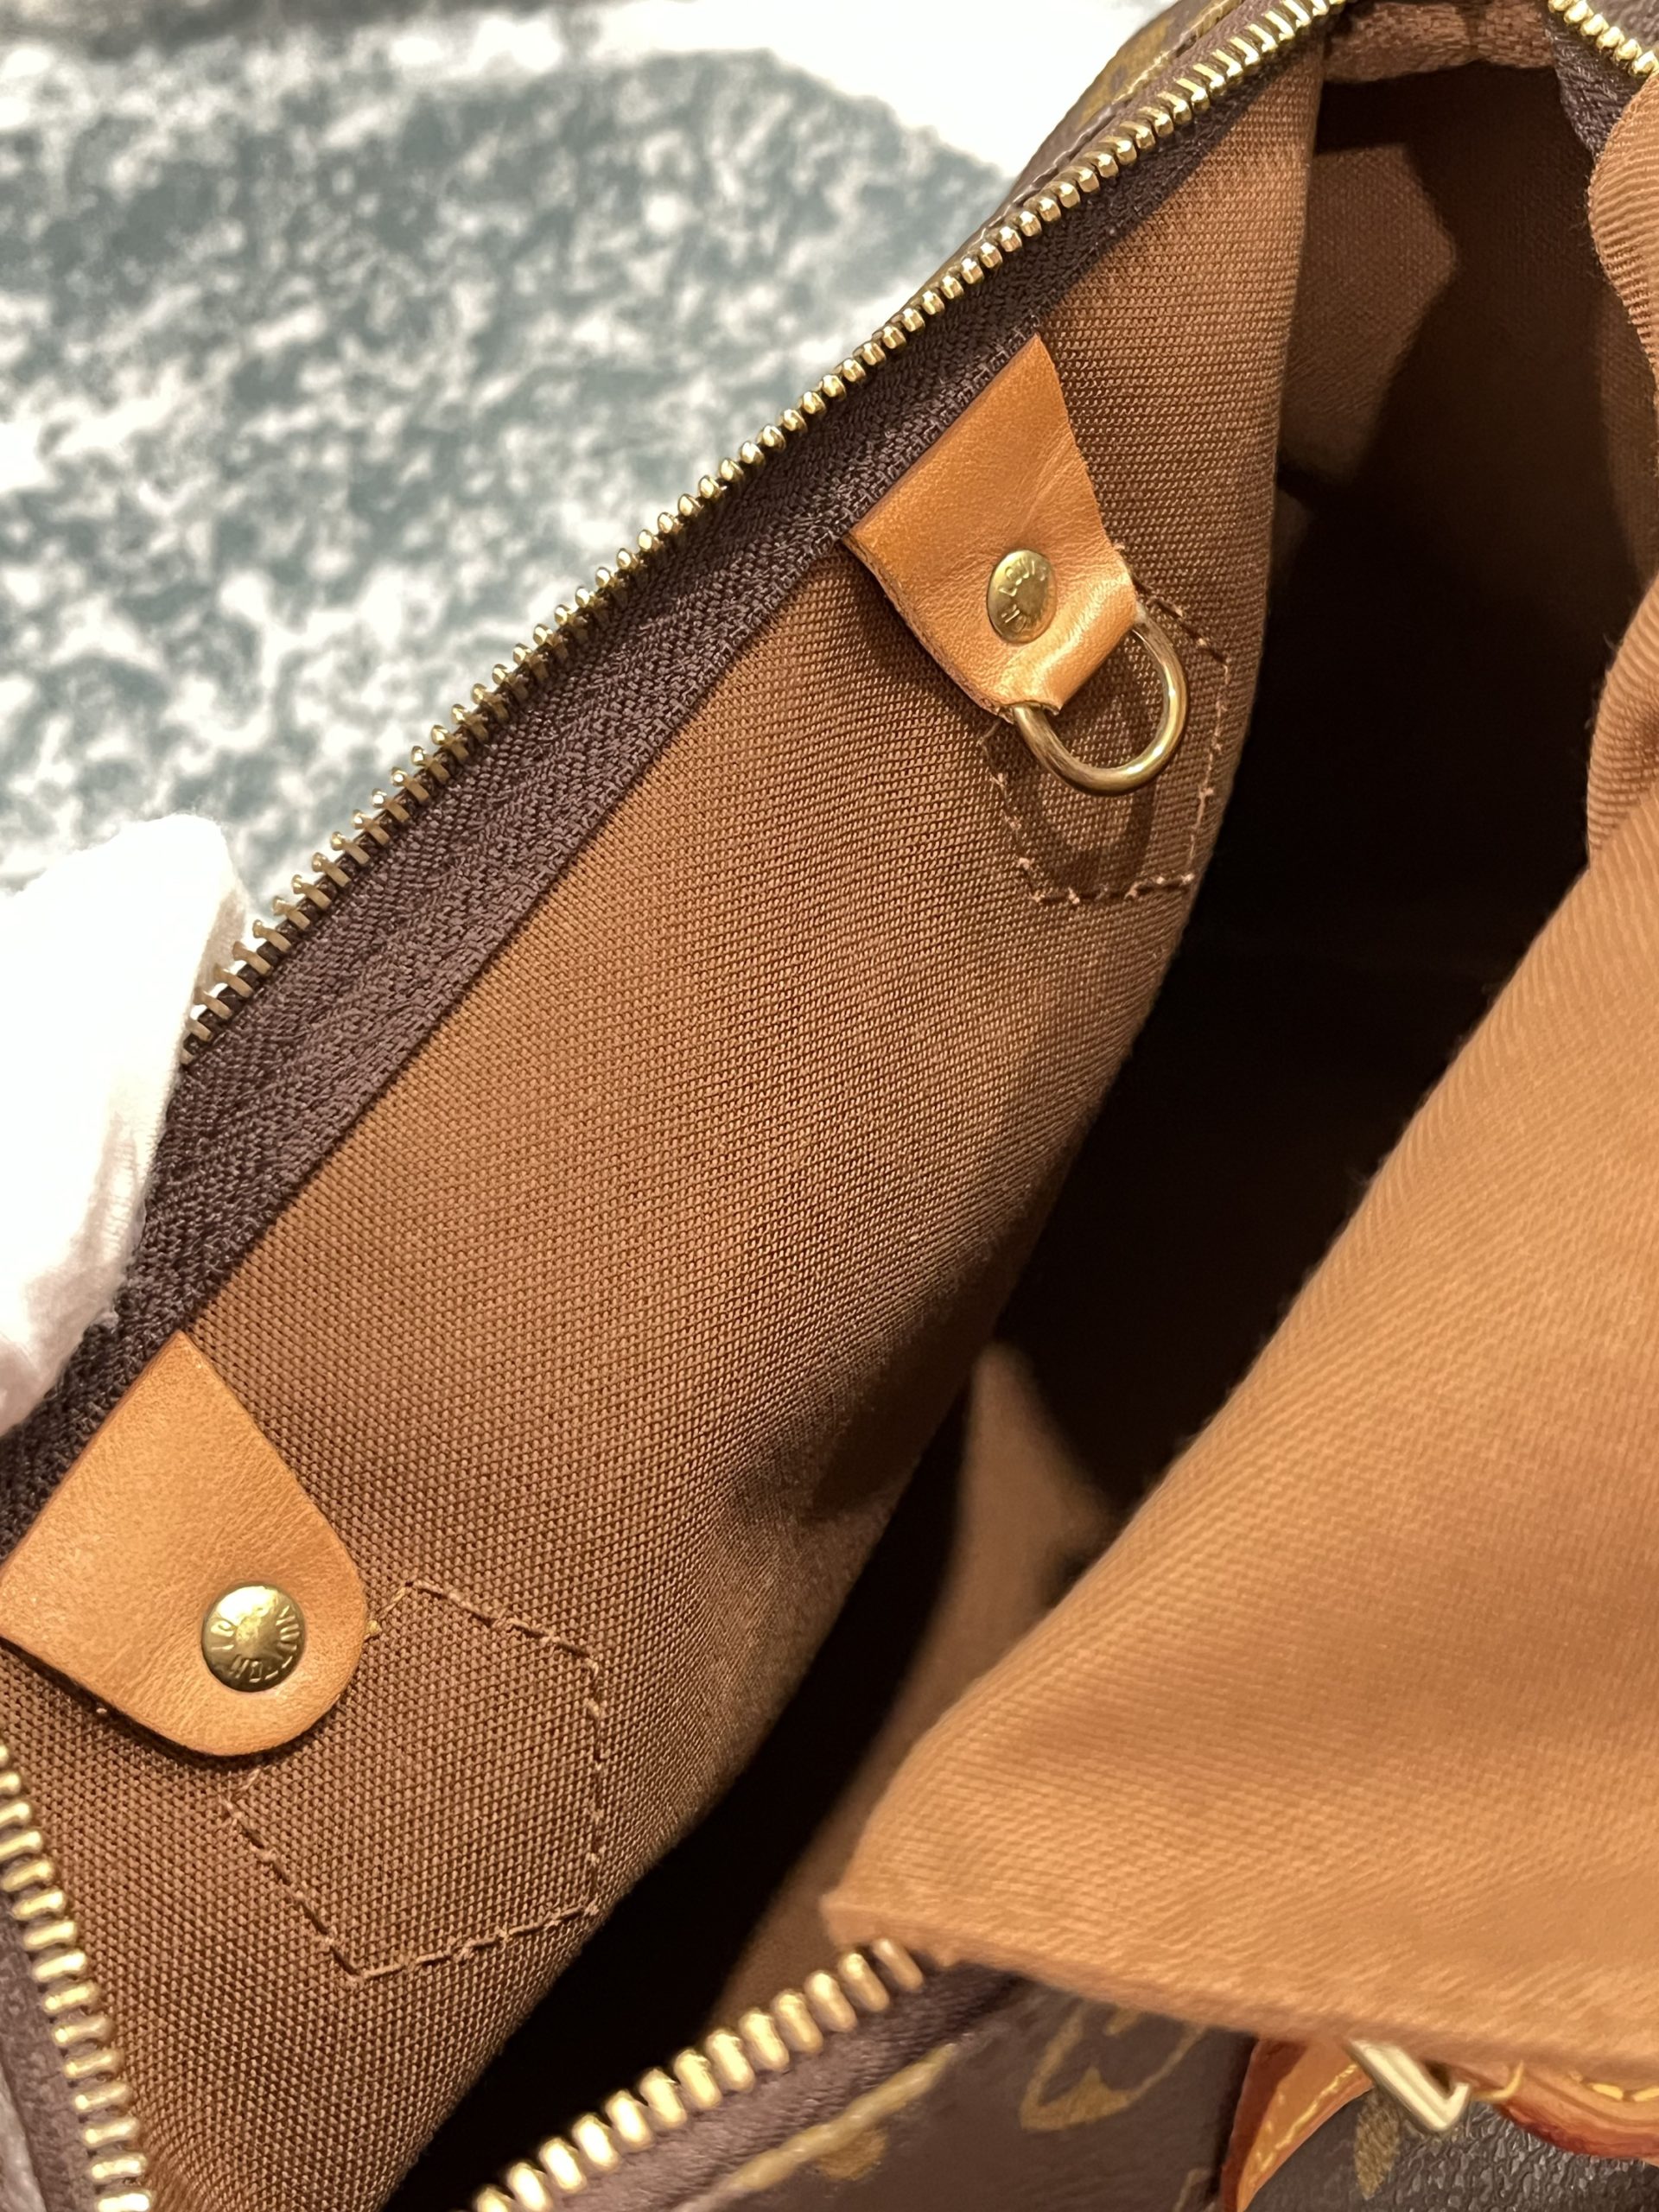 Date Code & Stamp] Louis Vuitton epi leather speedy bag